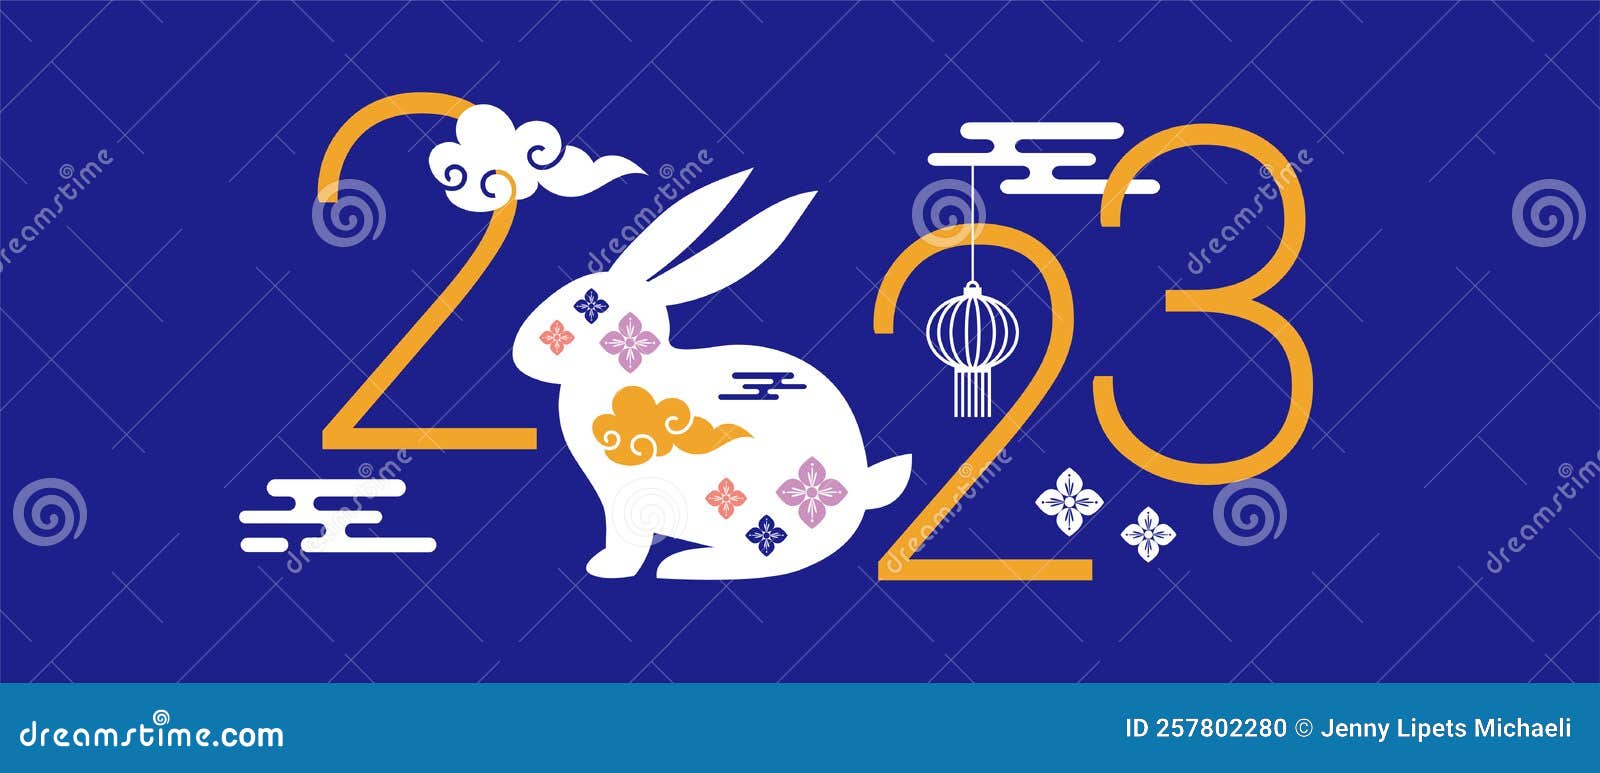 Chinese lunar new year rabbit symbol 2023 Vector Image